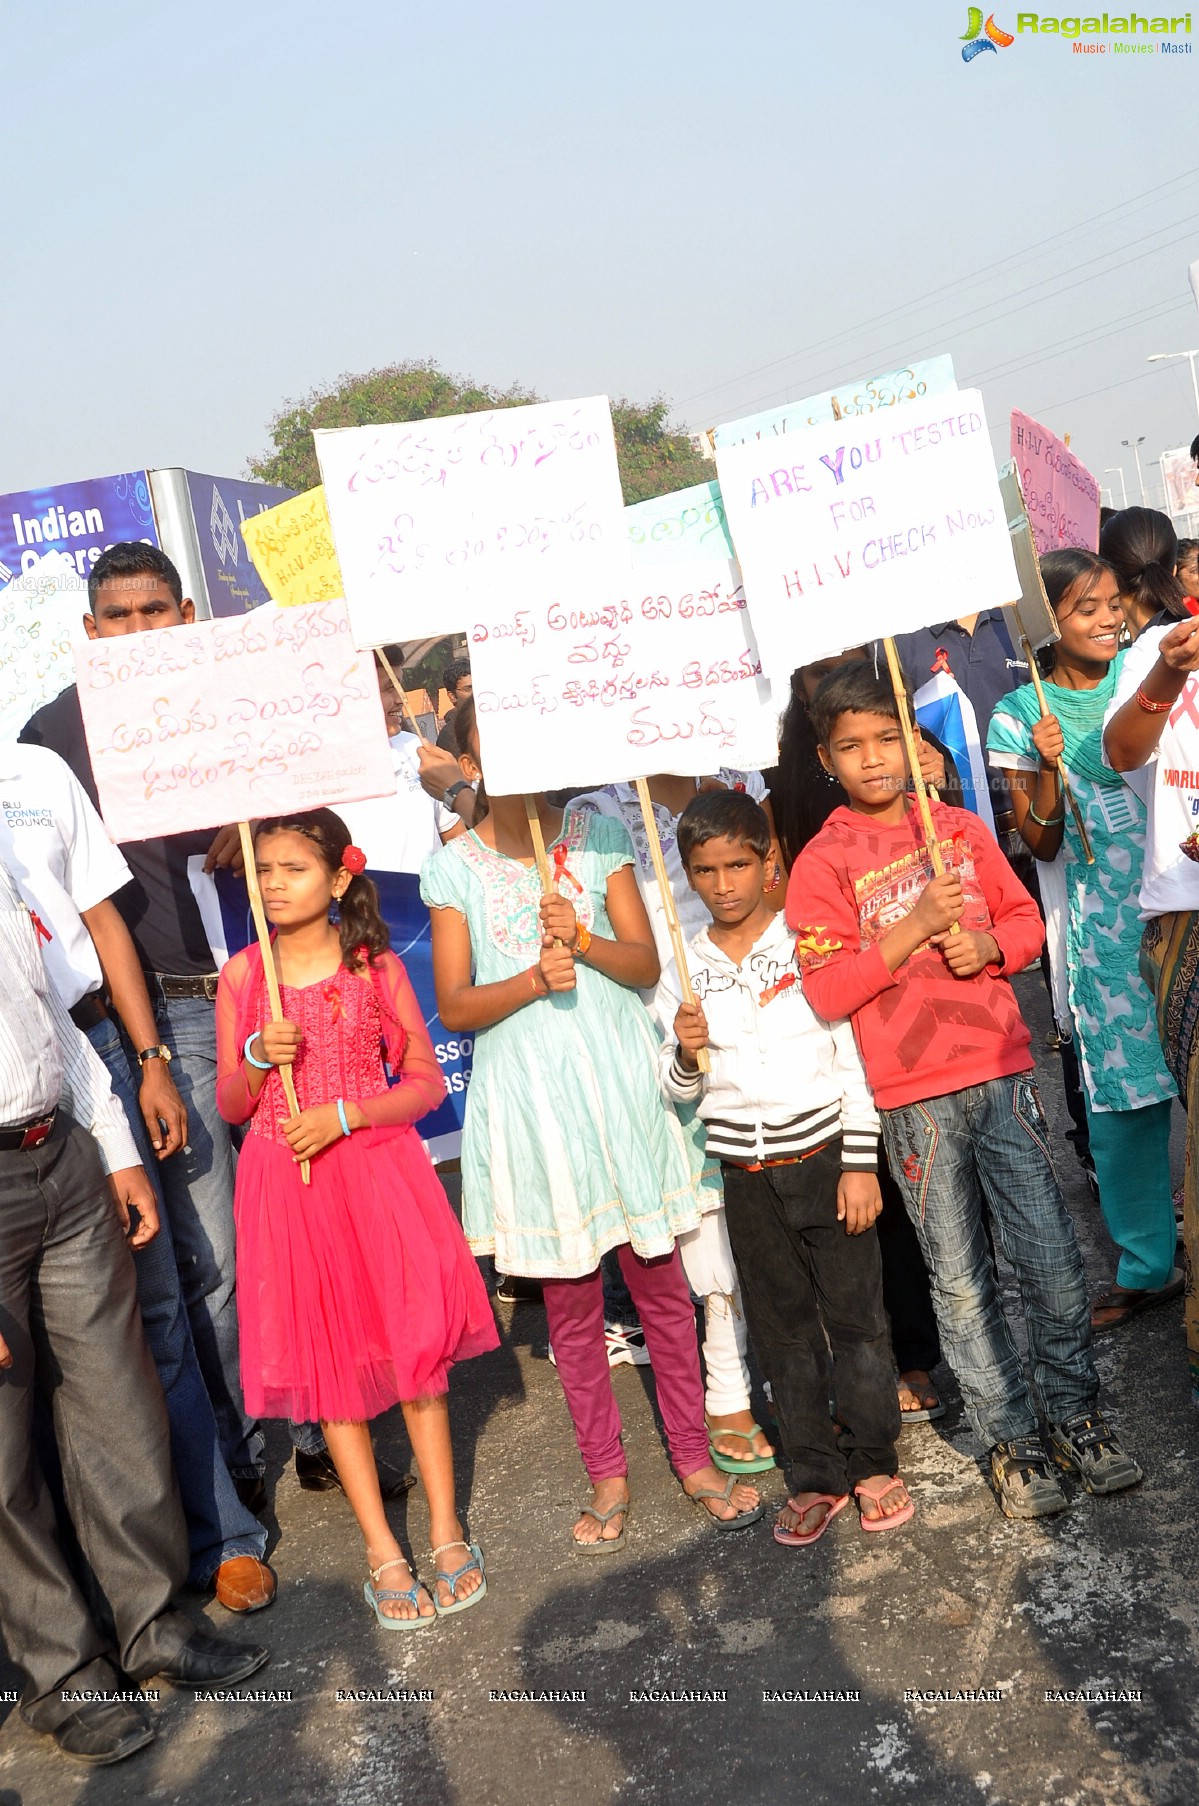 Aids Awareness Run by Desire Society, Hyderabad